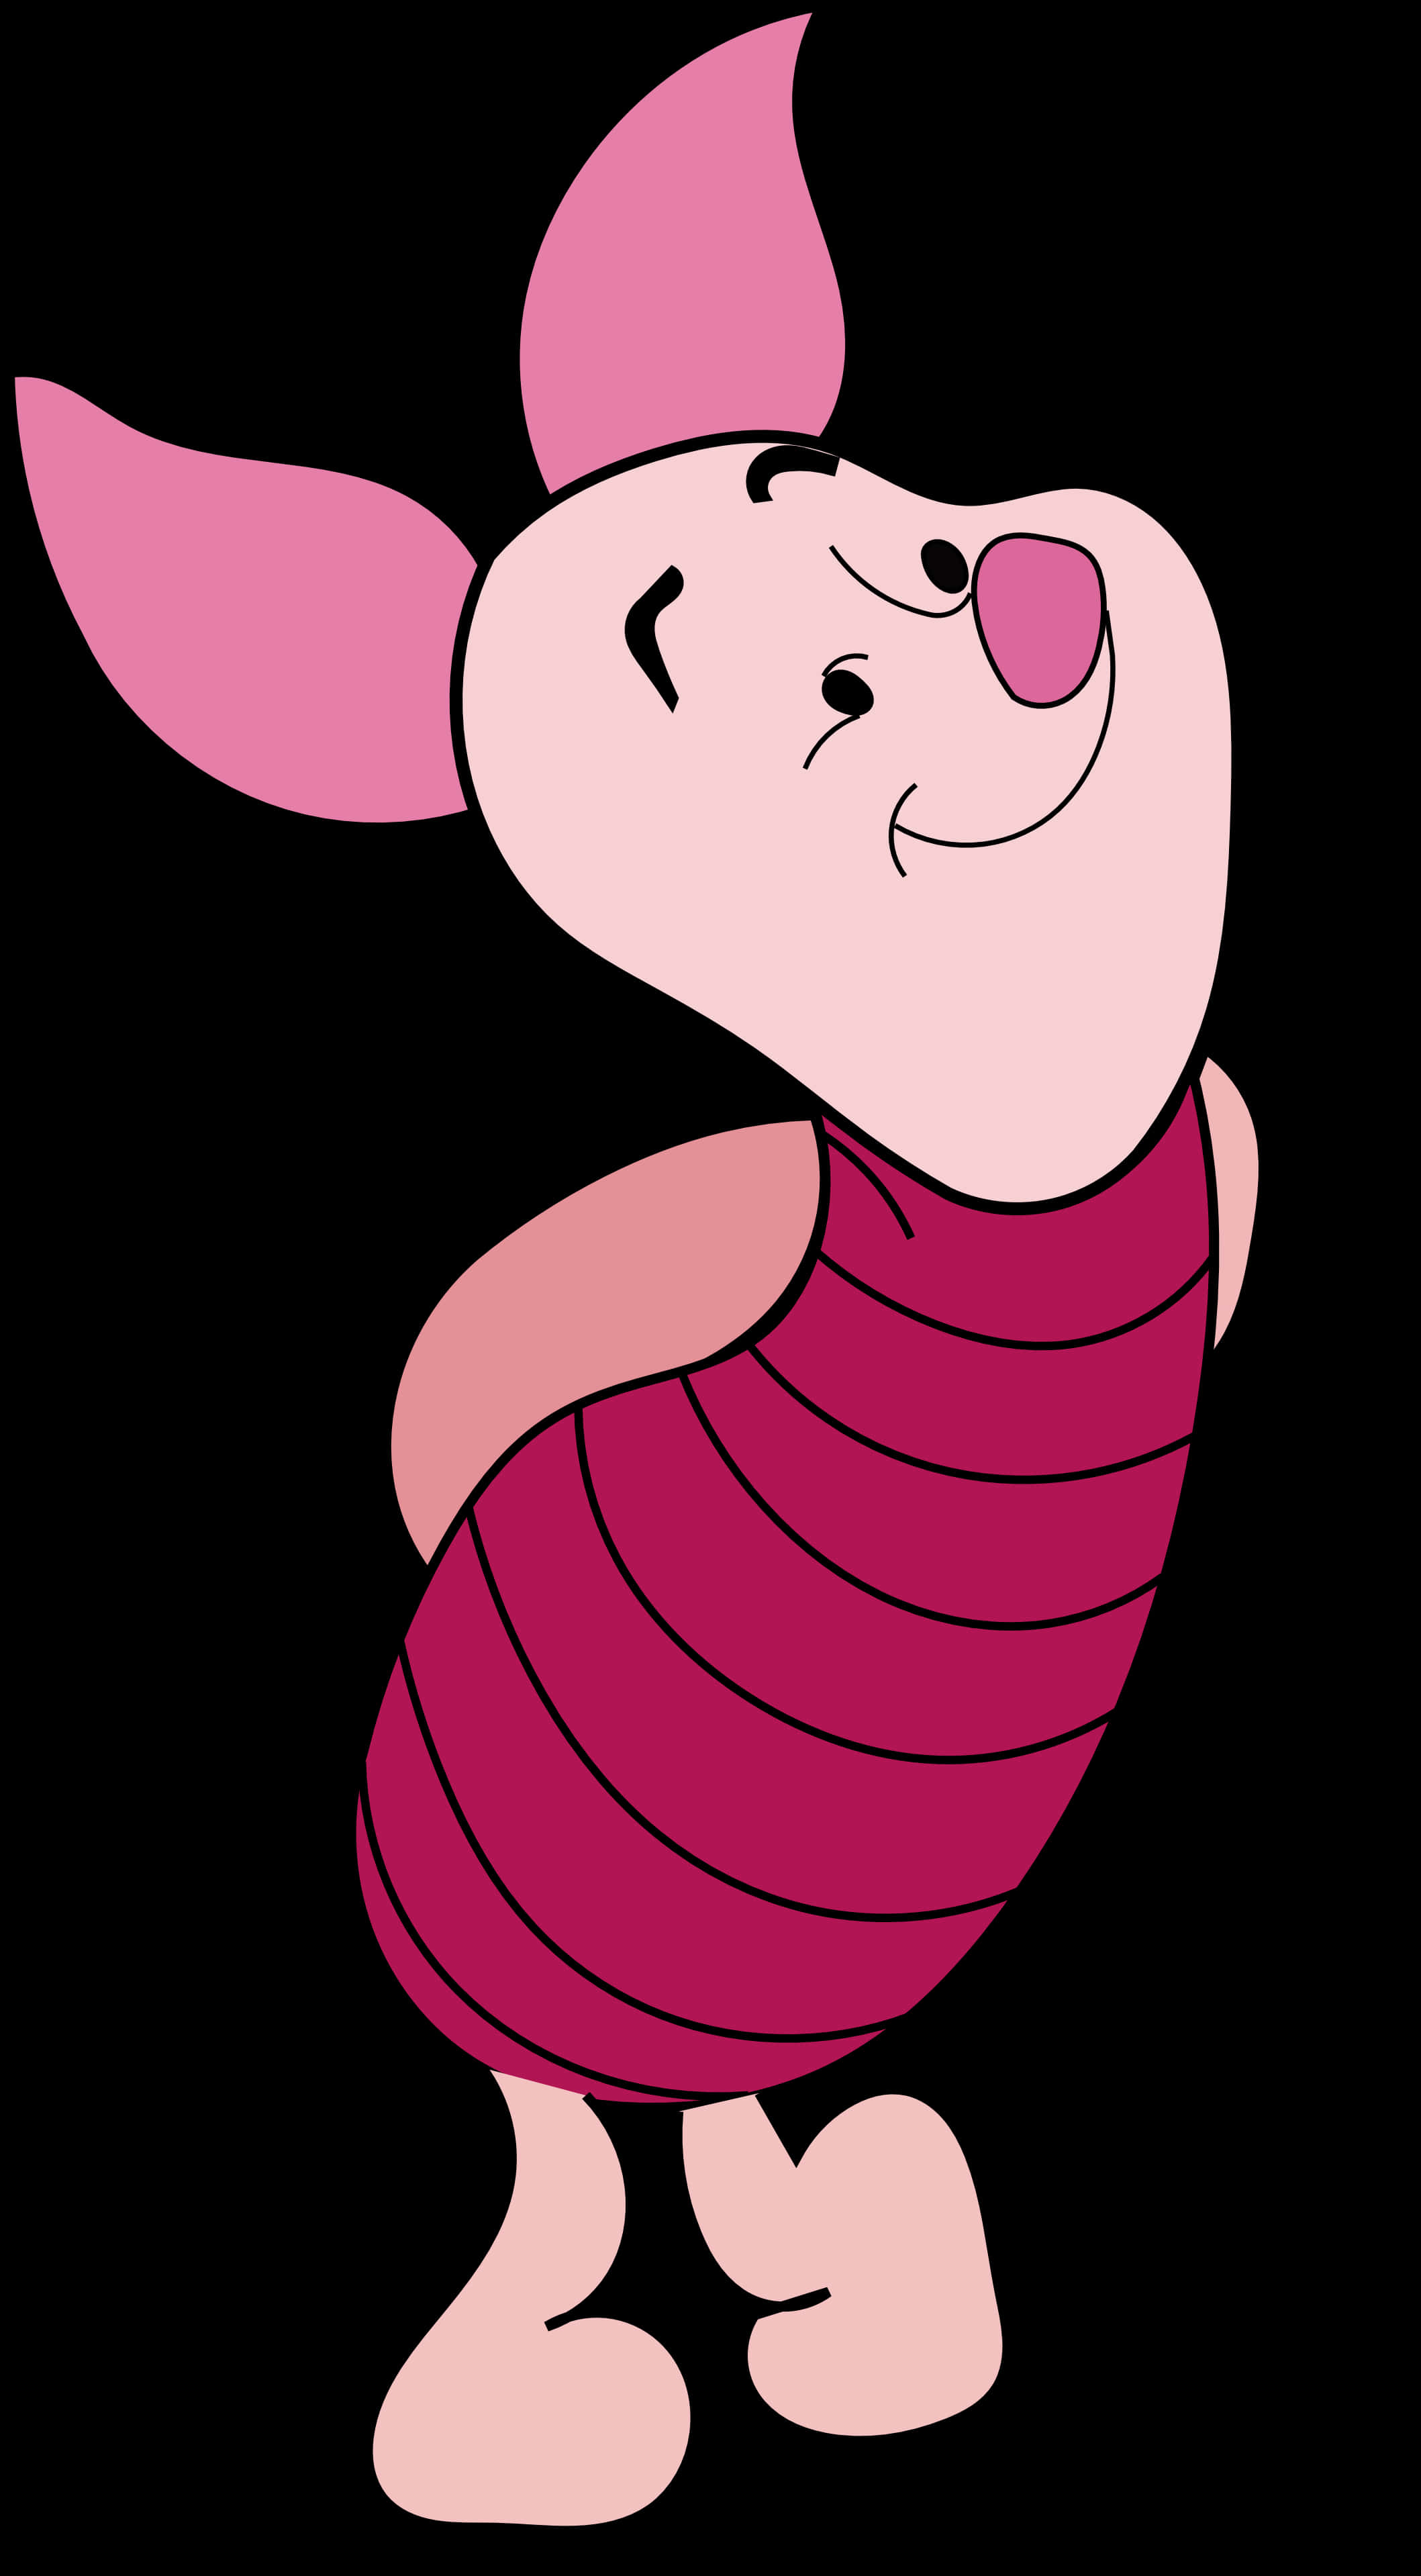 Cartoon Character Of A Piglet